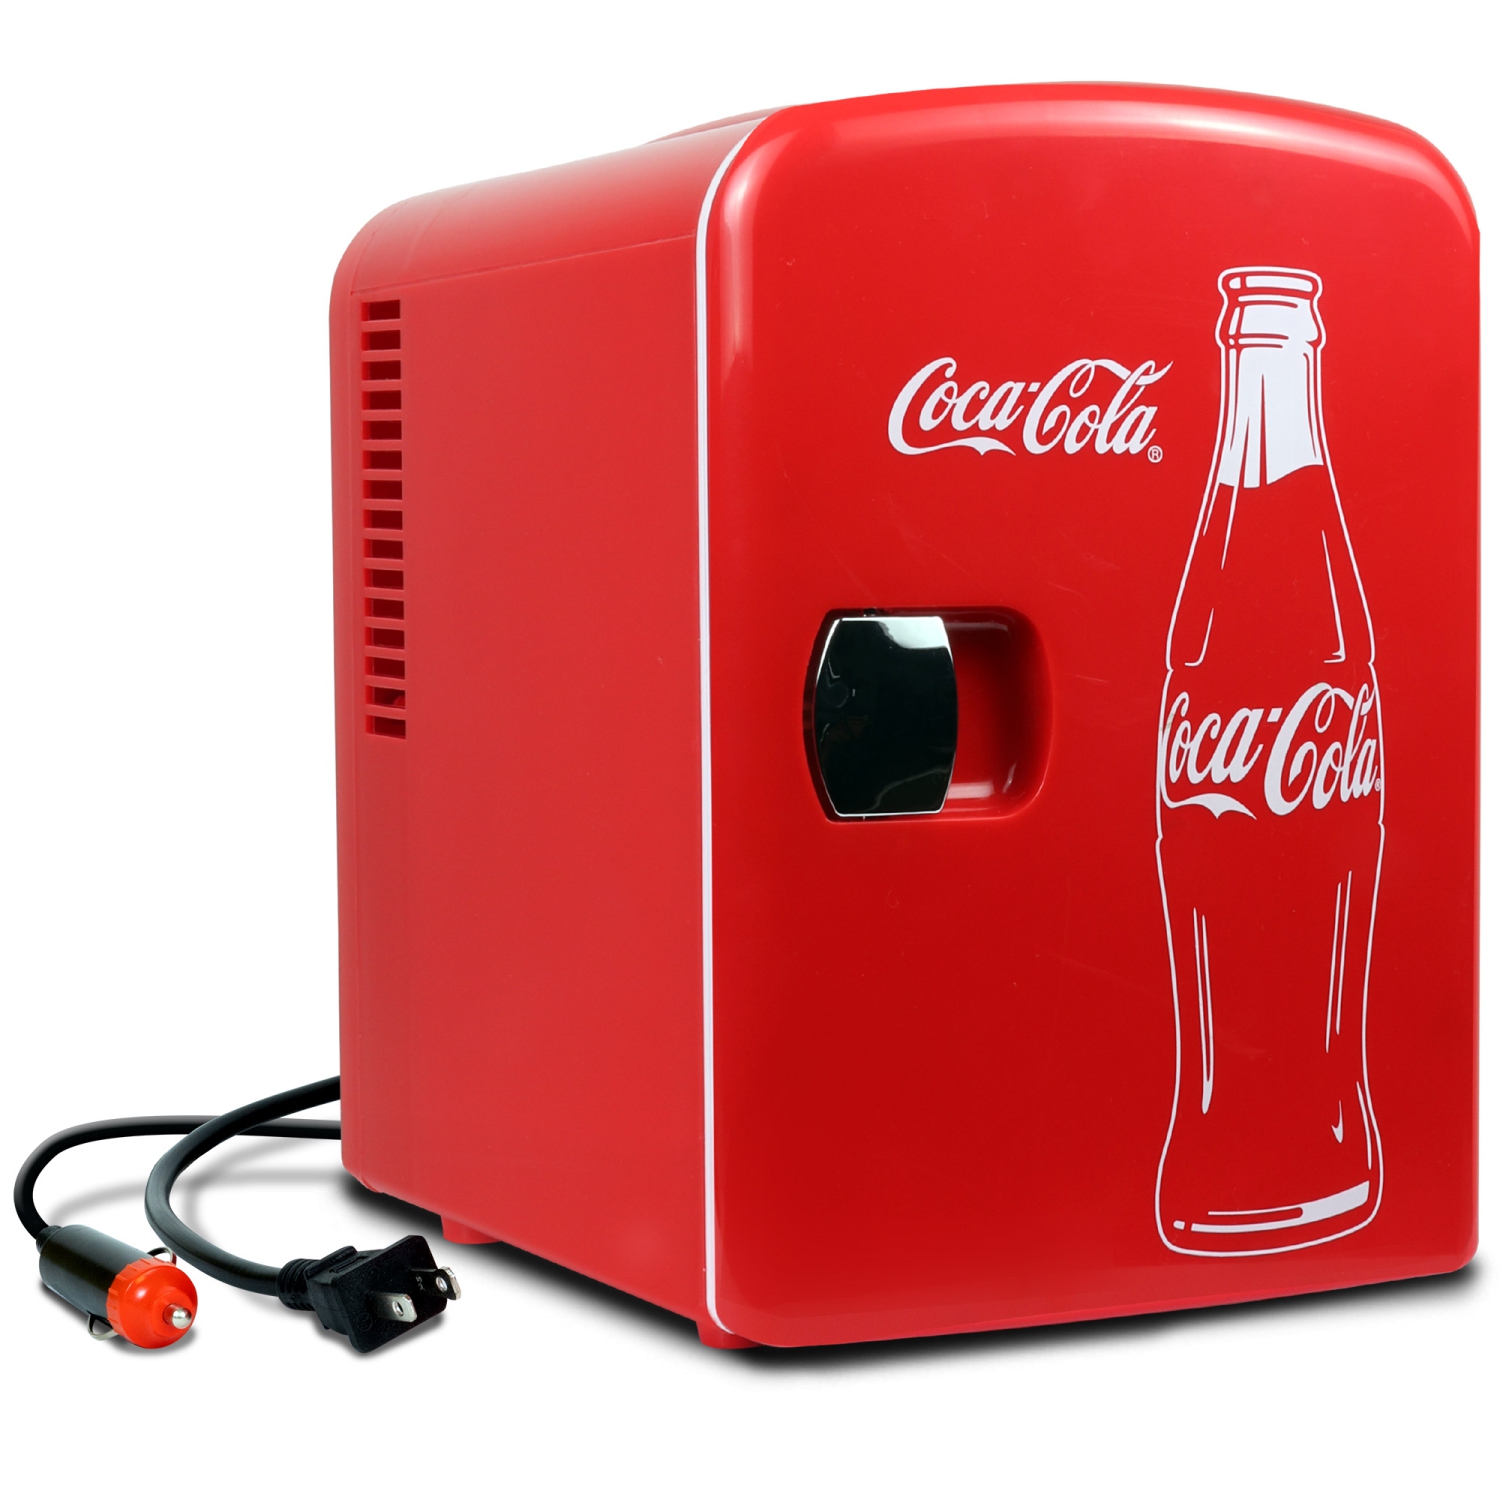 Coca-Cola Classic Coke Bottle 4L Mini Fridge w/ 12V DC and 110V AC Cords, 6 Can Portable Cooler, Personal Travel Refrigerator Red